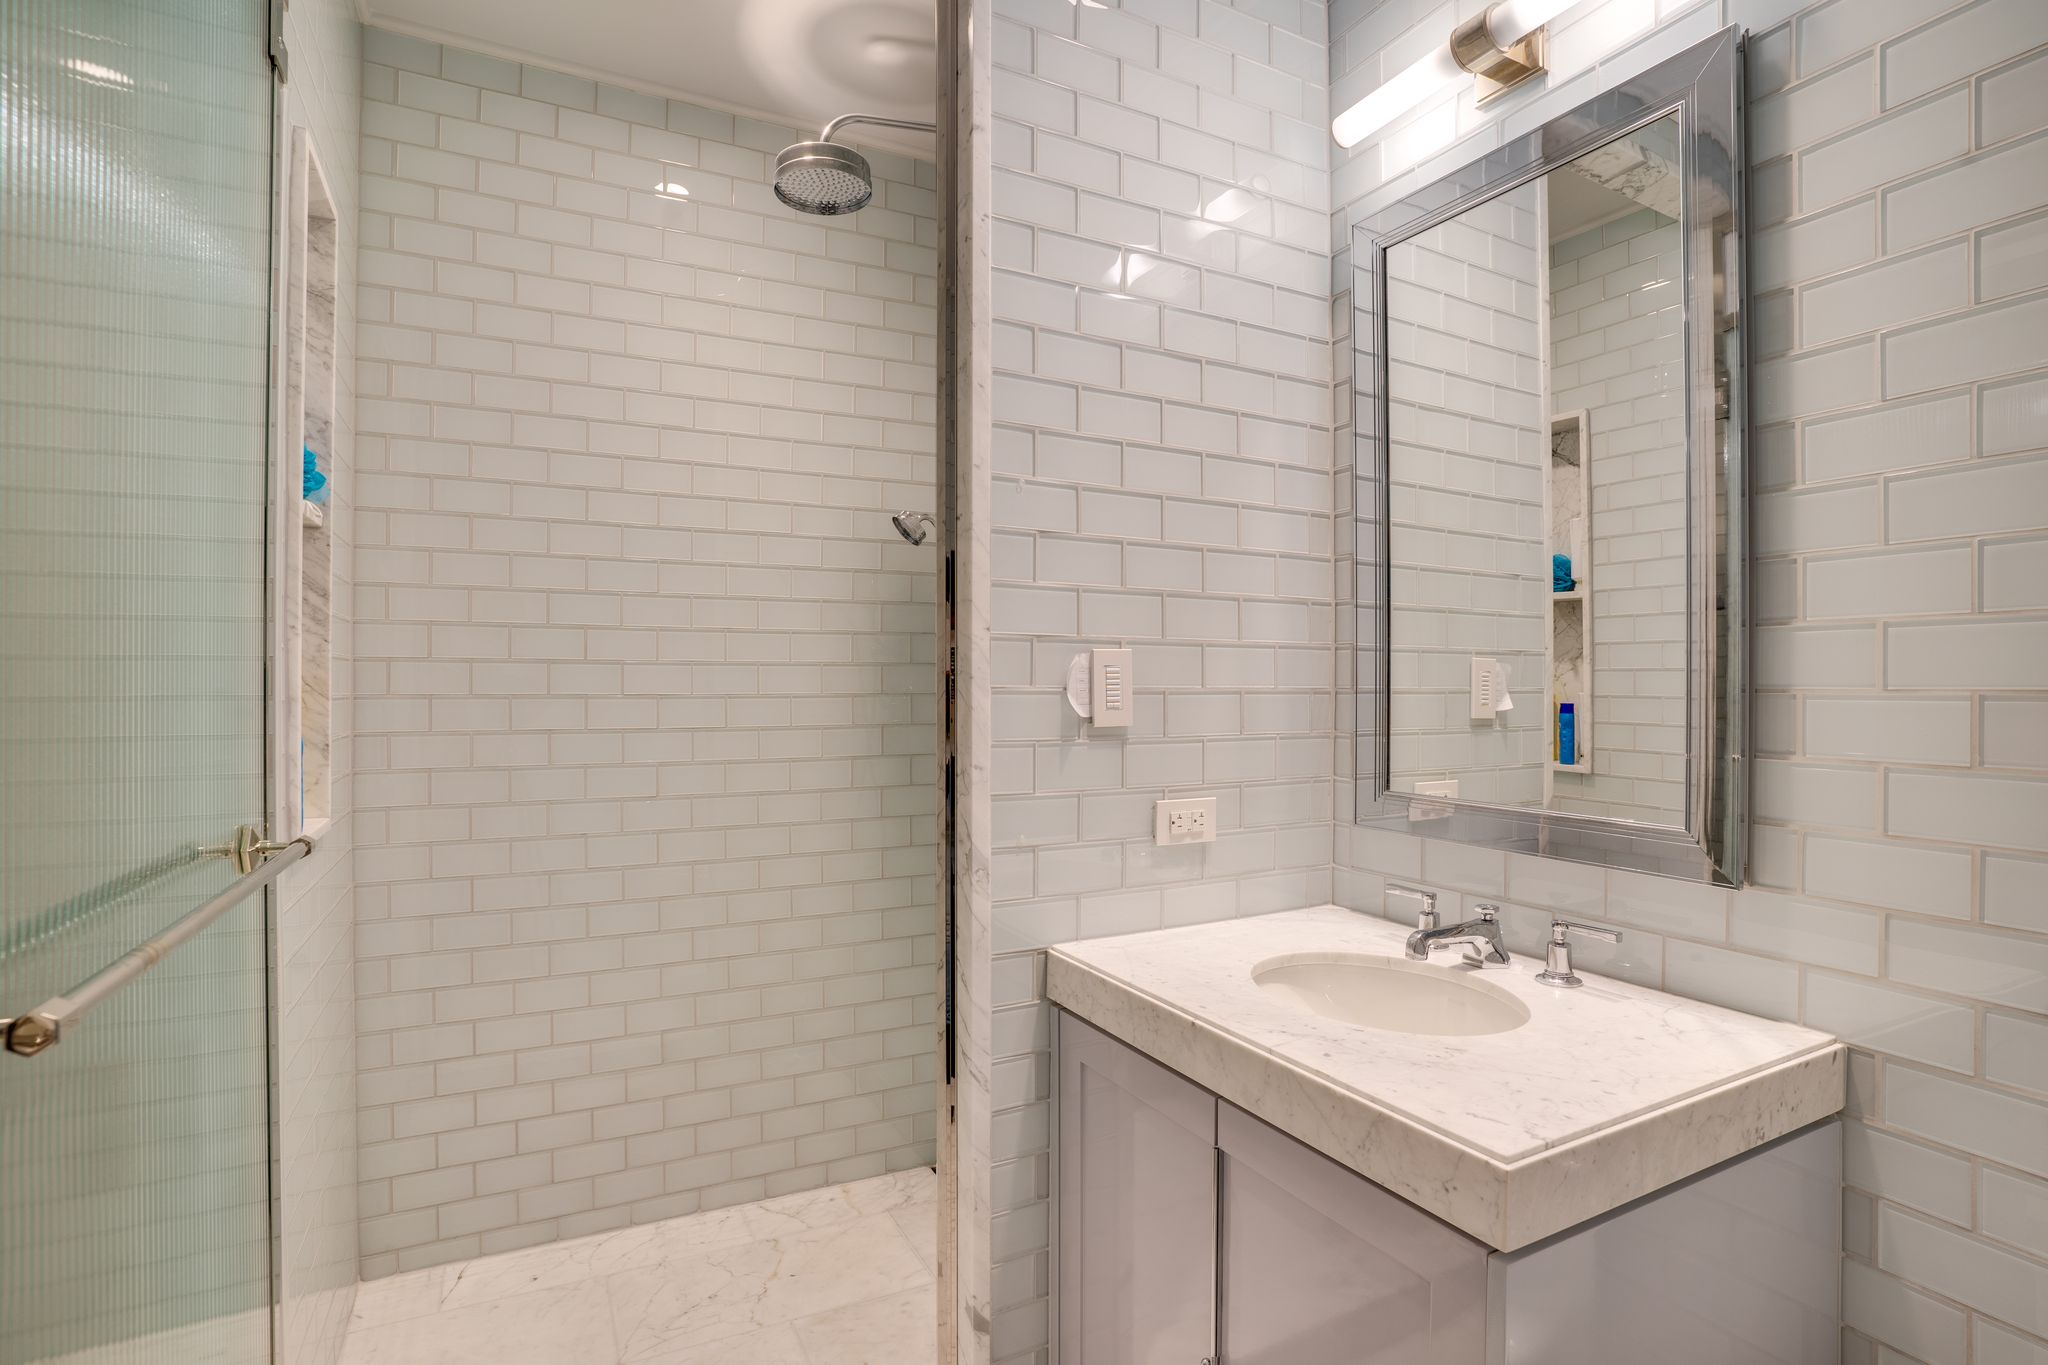 Bathroom - Apartment Renovation | 301 East 80th, New York, NY